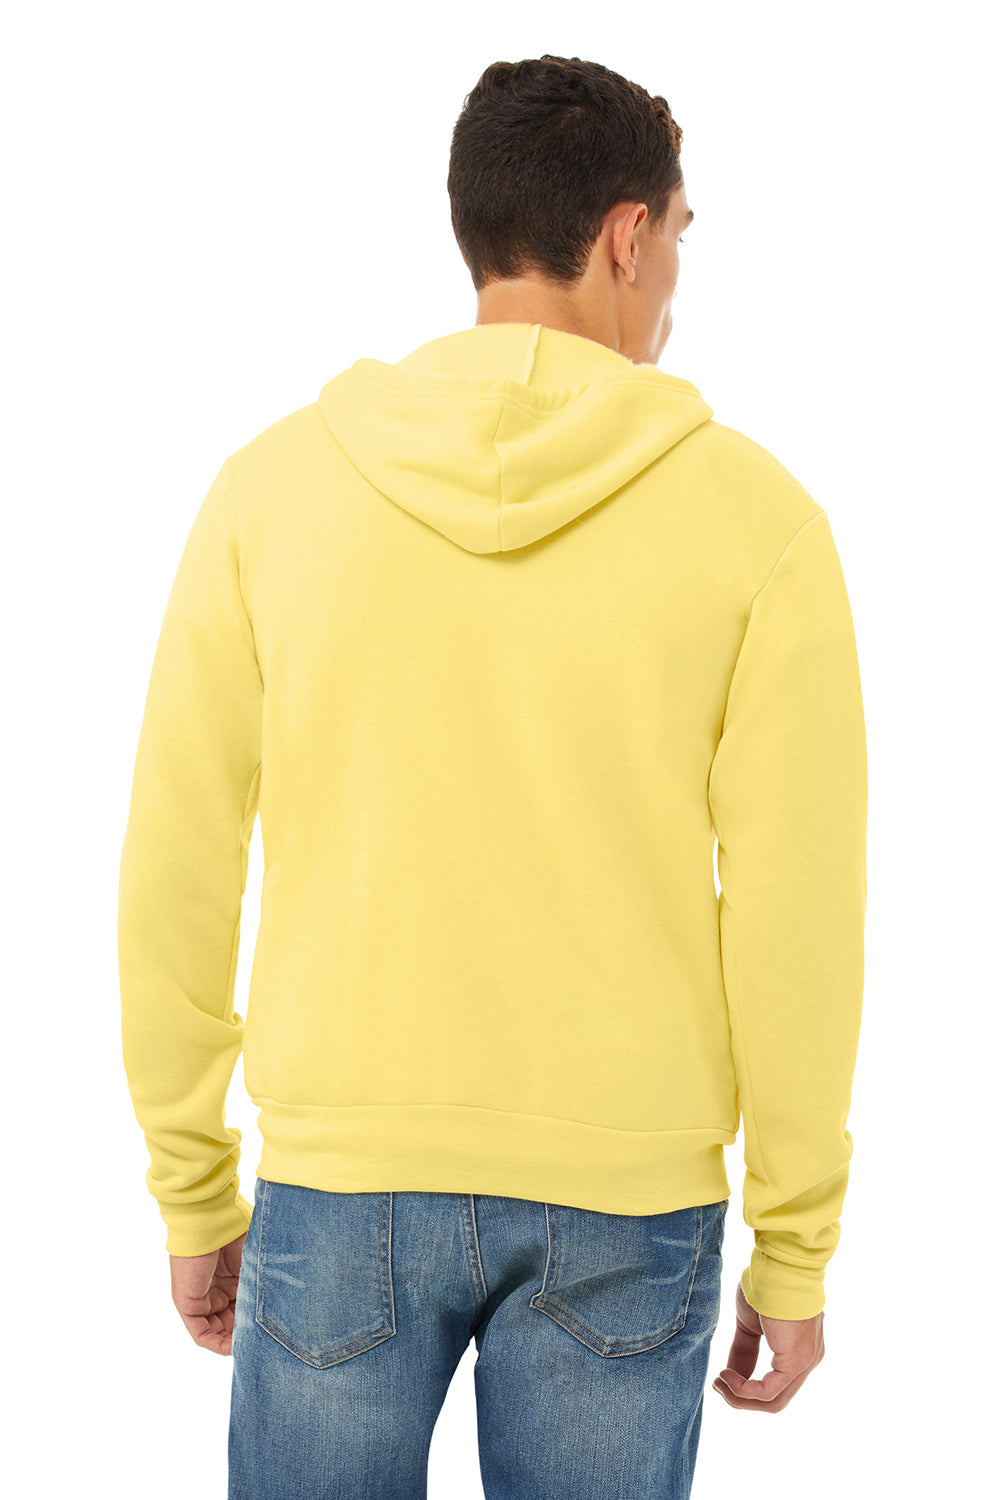 Bella + Canvas BC3739/3739 Mens Fleece Full Zip Hooded Sweatshirt Hoodie Yellow Model Back